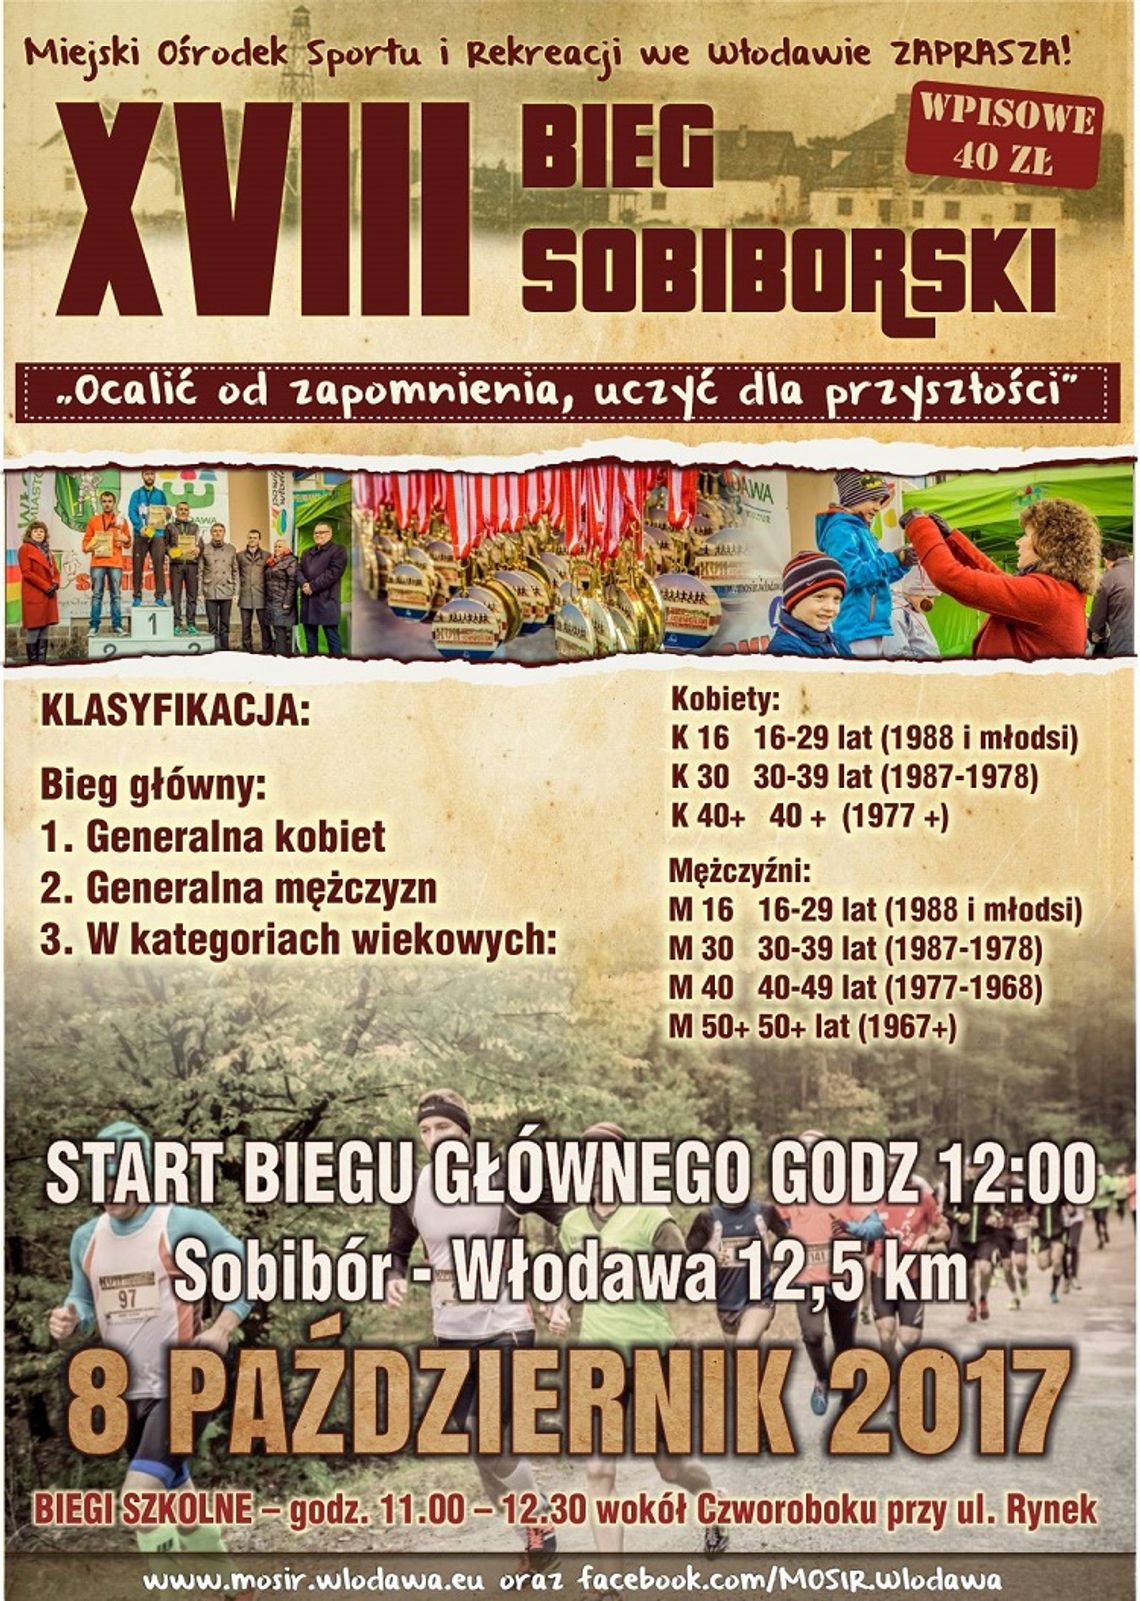 XVIII Bieg Sobiborski już 8 października